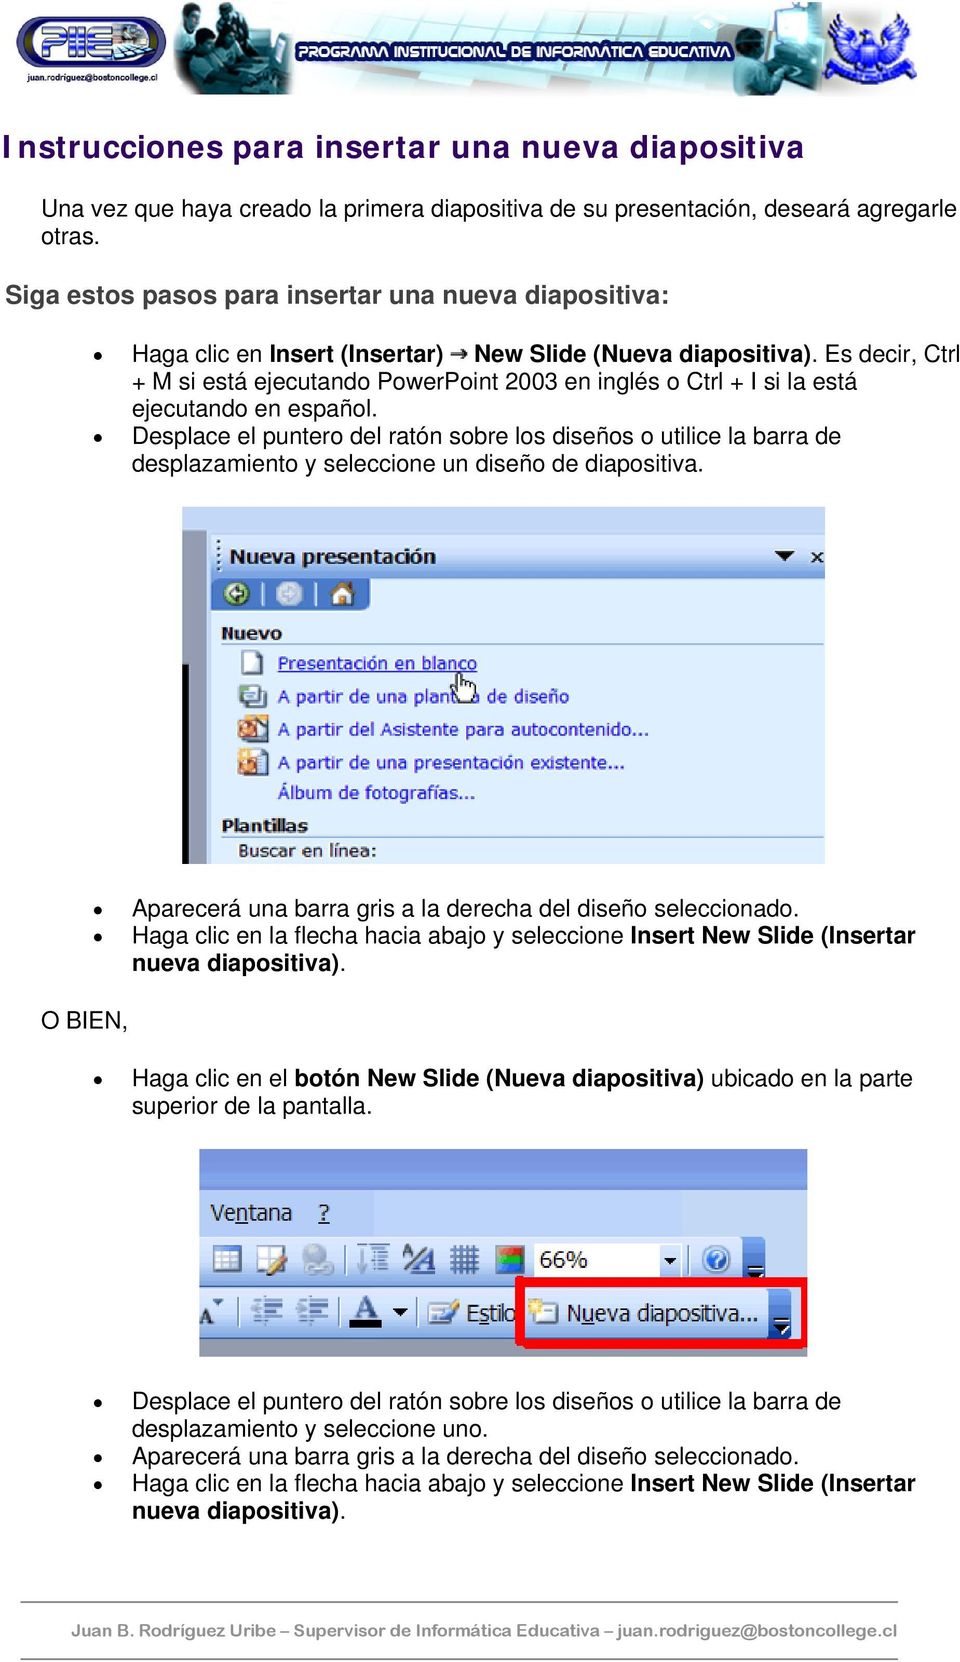 Es decir, Ctrl + M si está ejecutando PowerPoint 2003 en inglés o Ctrl + I si la está ejecutando en español.